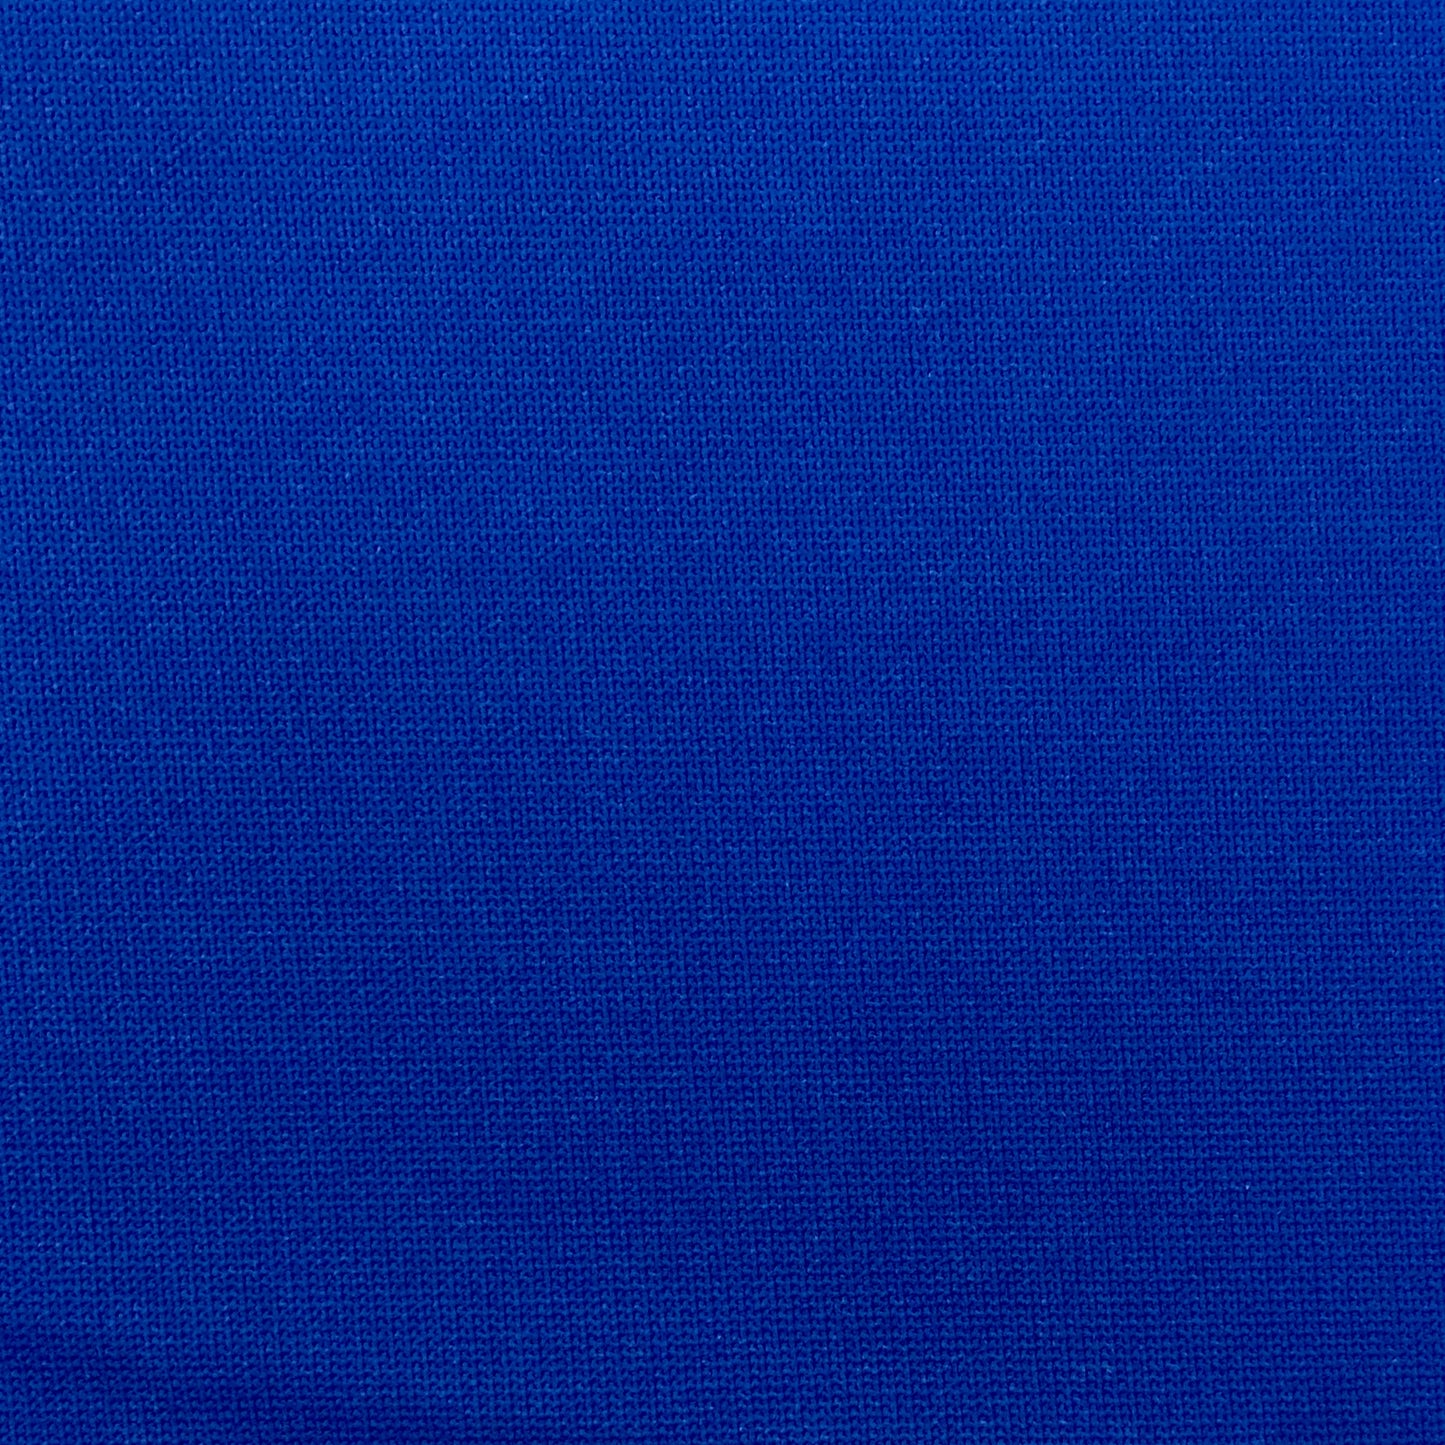 150D Polyester Reusable Bag Fabric - Royal Blue  (Sold per Yard)